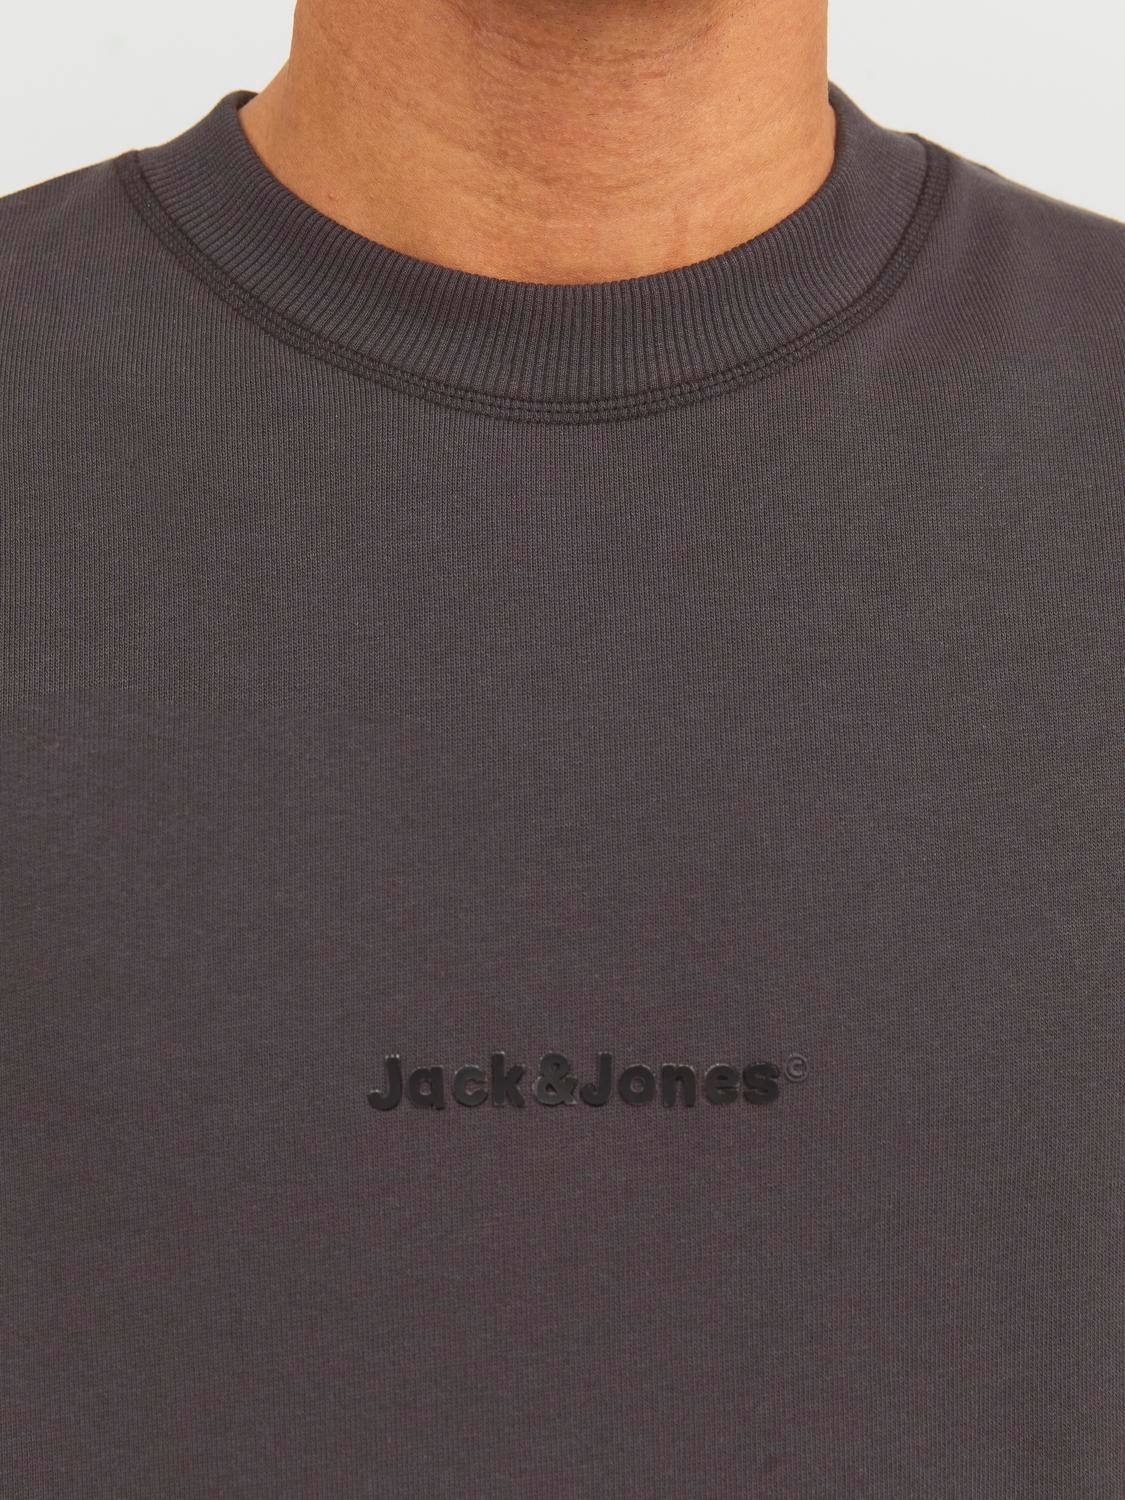 Jack & Jones Logo Crewn Neck Sweatshirt -Phantom - 12234185